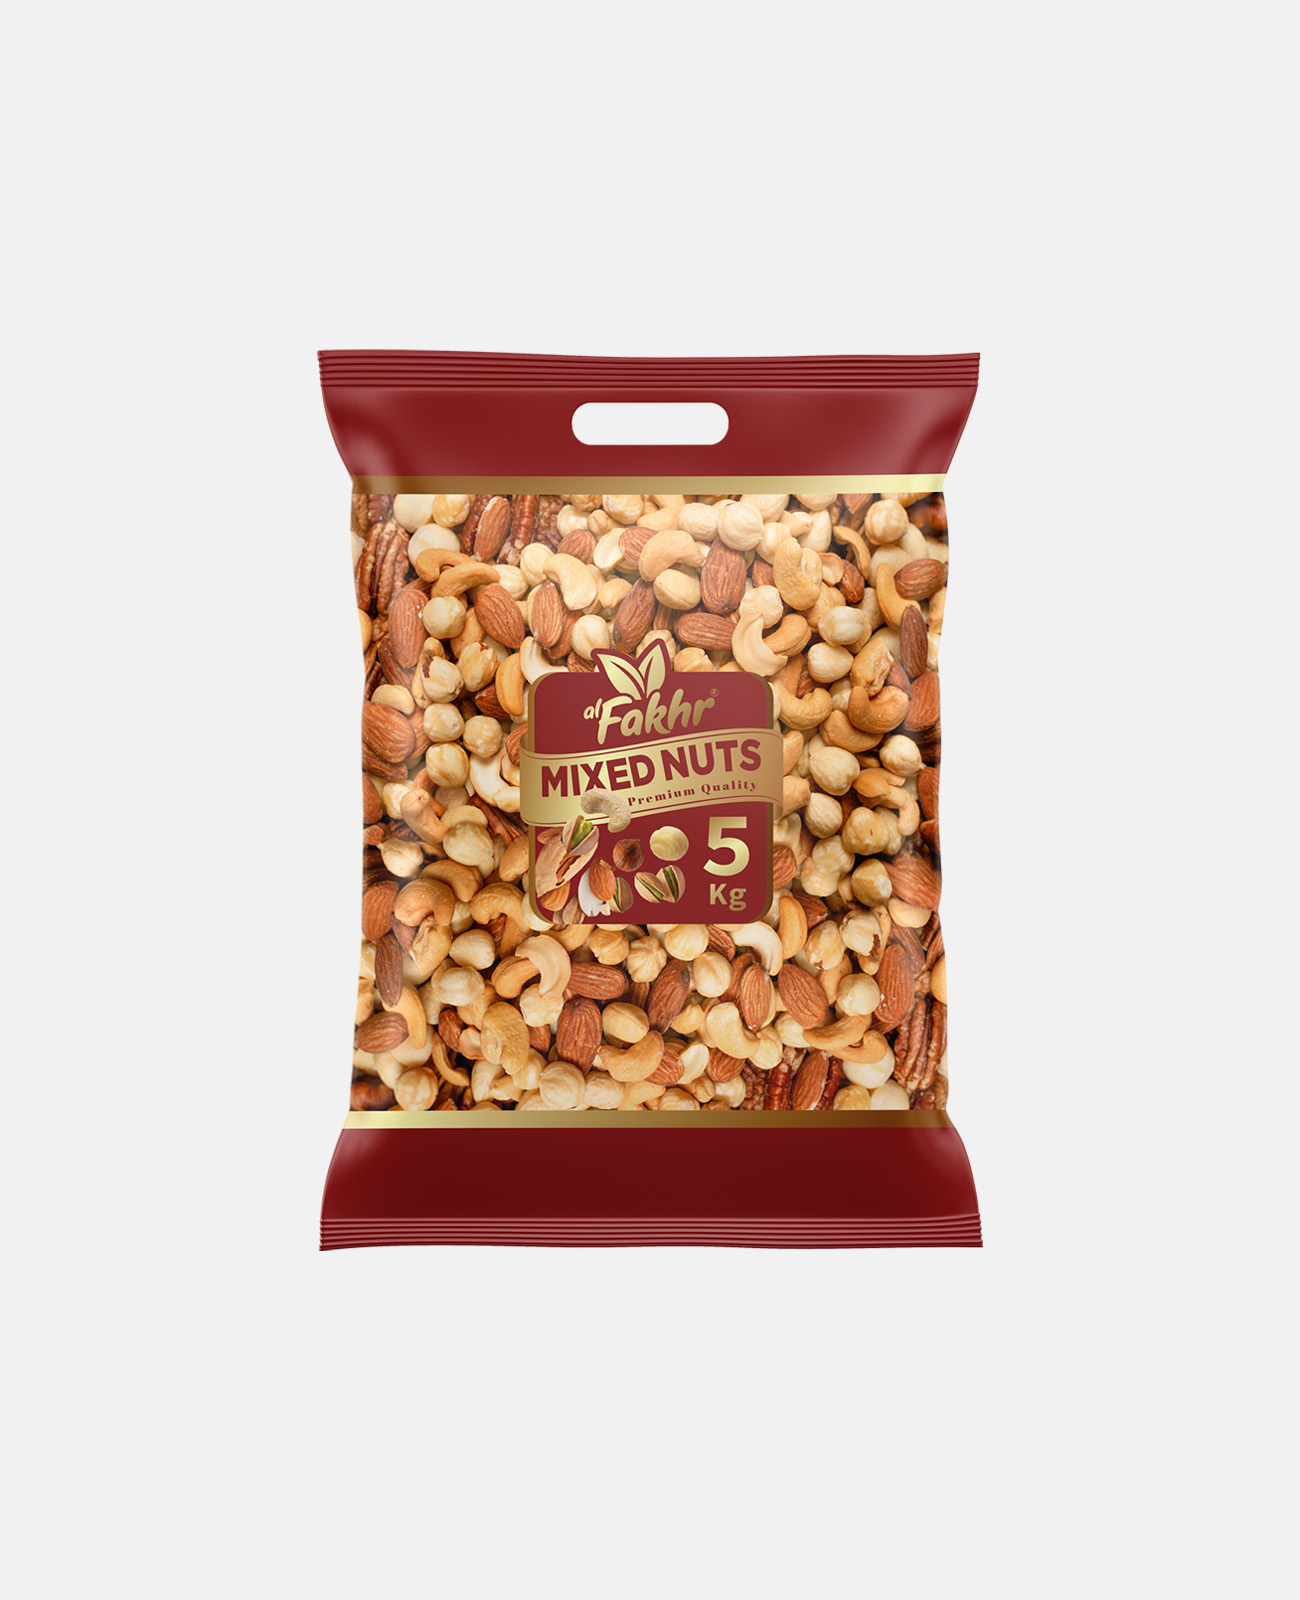 Alfakhr Premium mixed Rusted Nuts/Barbeque